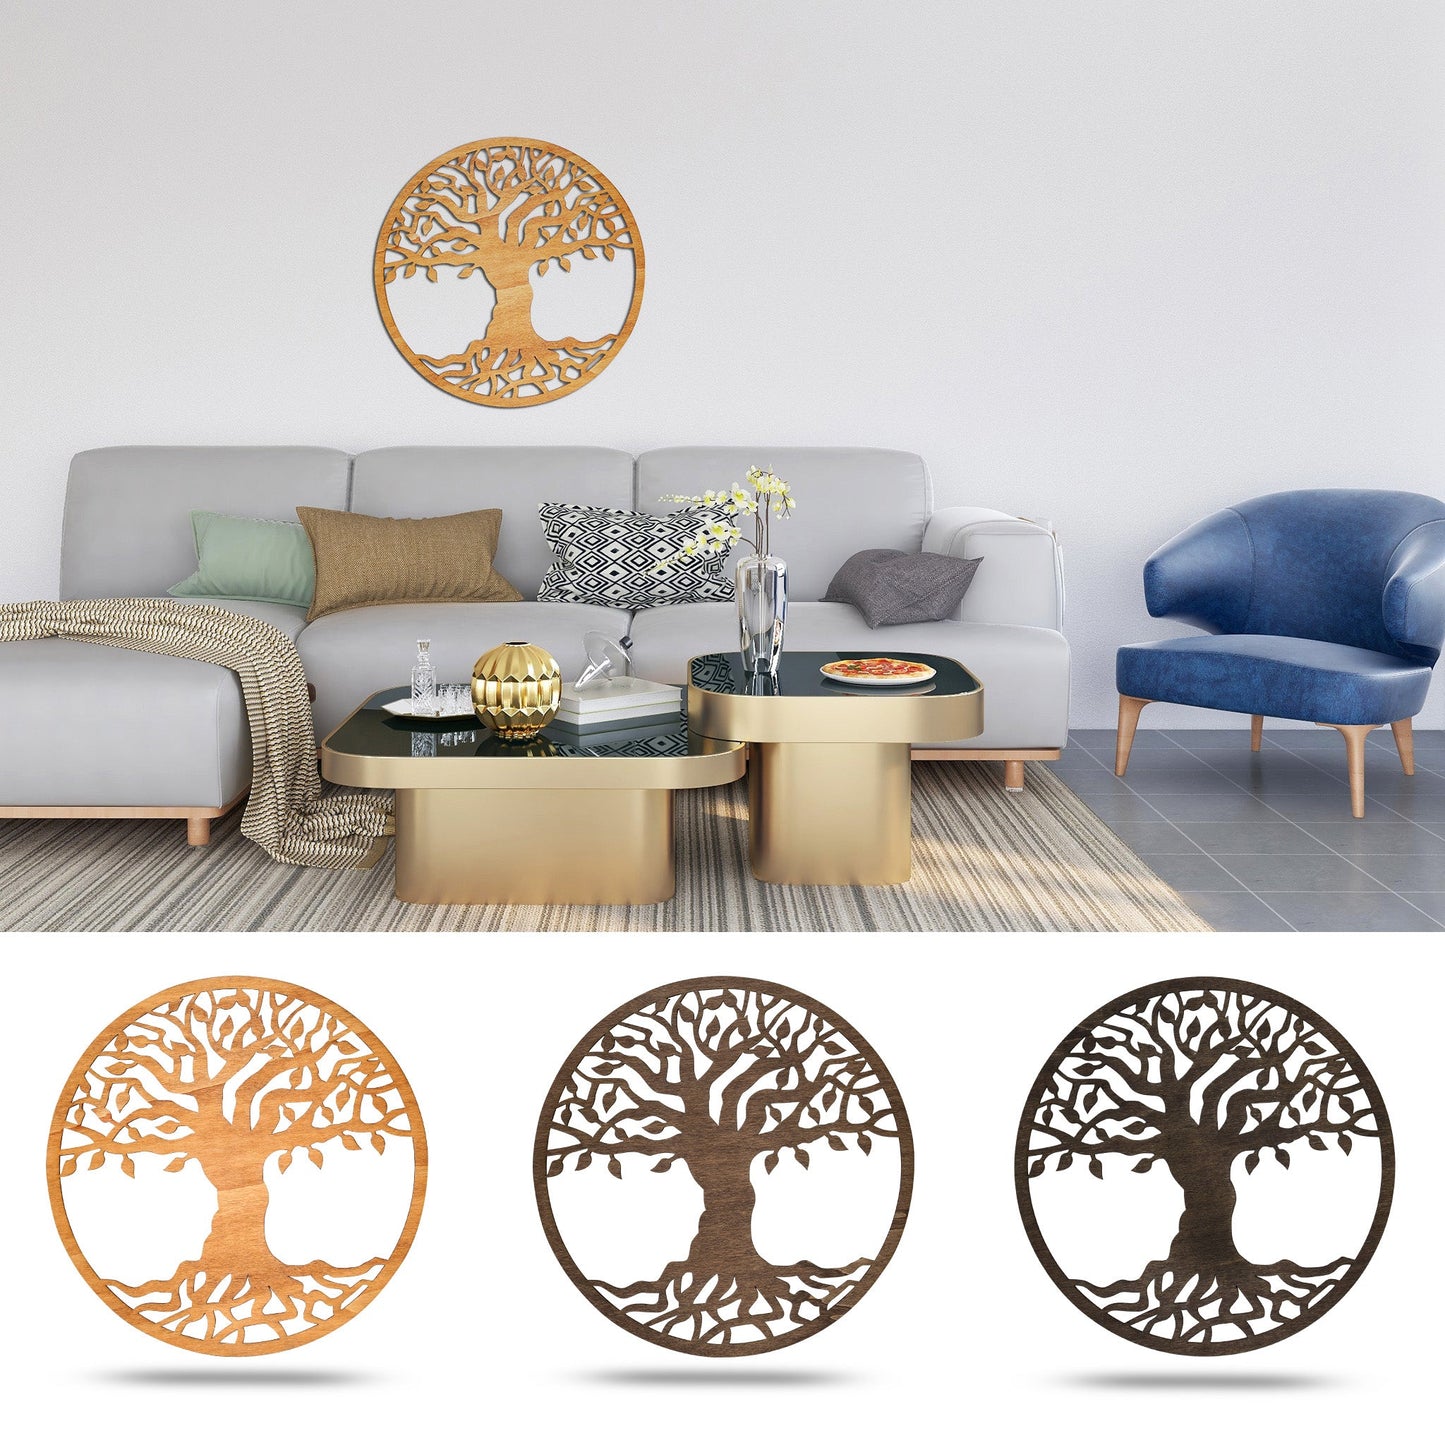 Wandbild Holz "Baum des Lebens" V2 - Nanino Design Onlineshop -